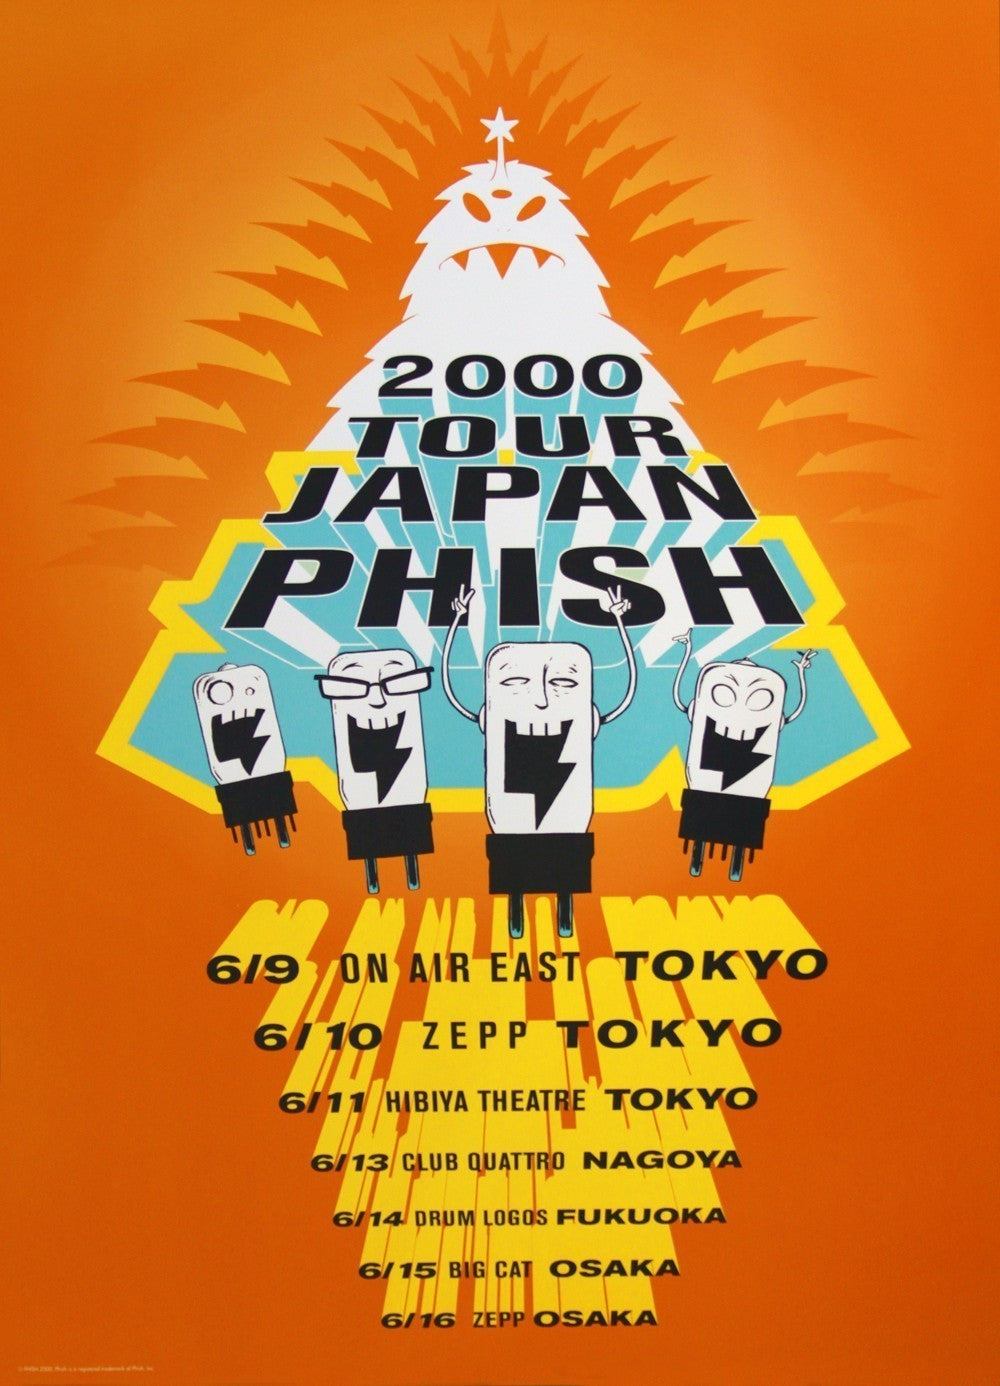 Artist Unknown - 2000 - Phish Japan Amp Tubes Tour Poster